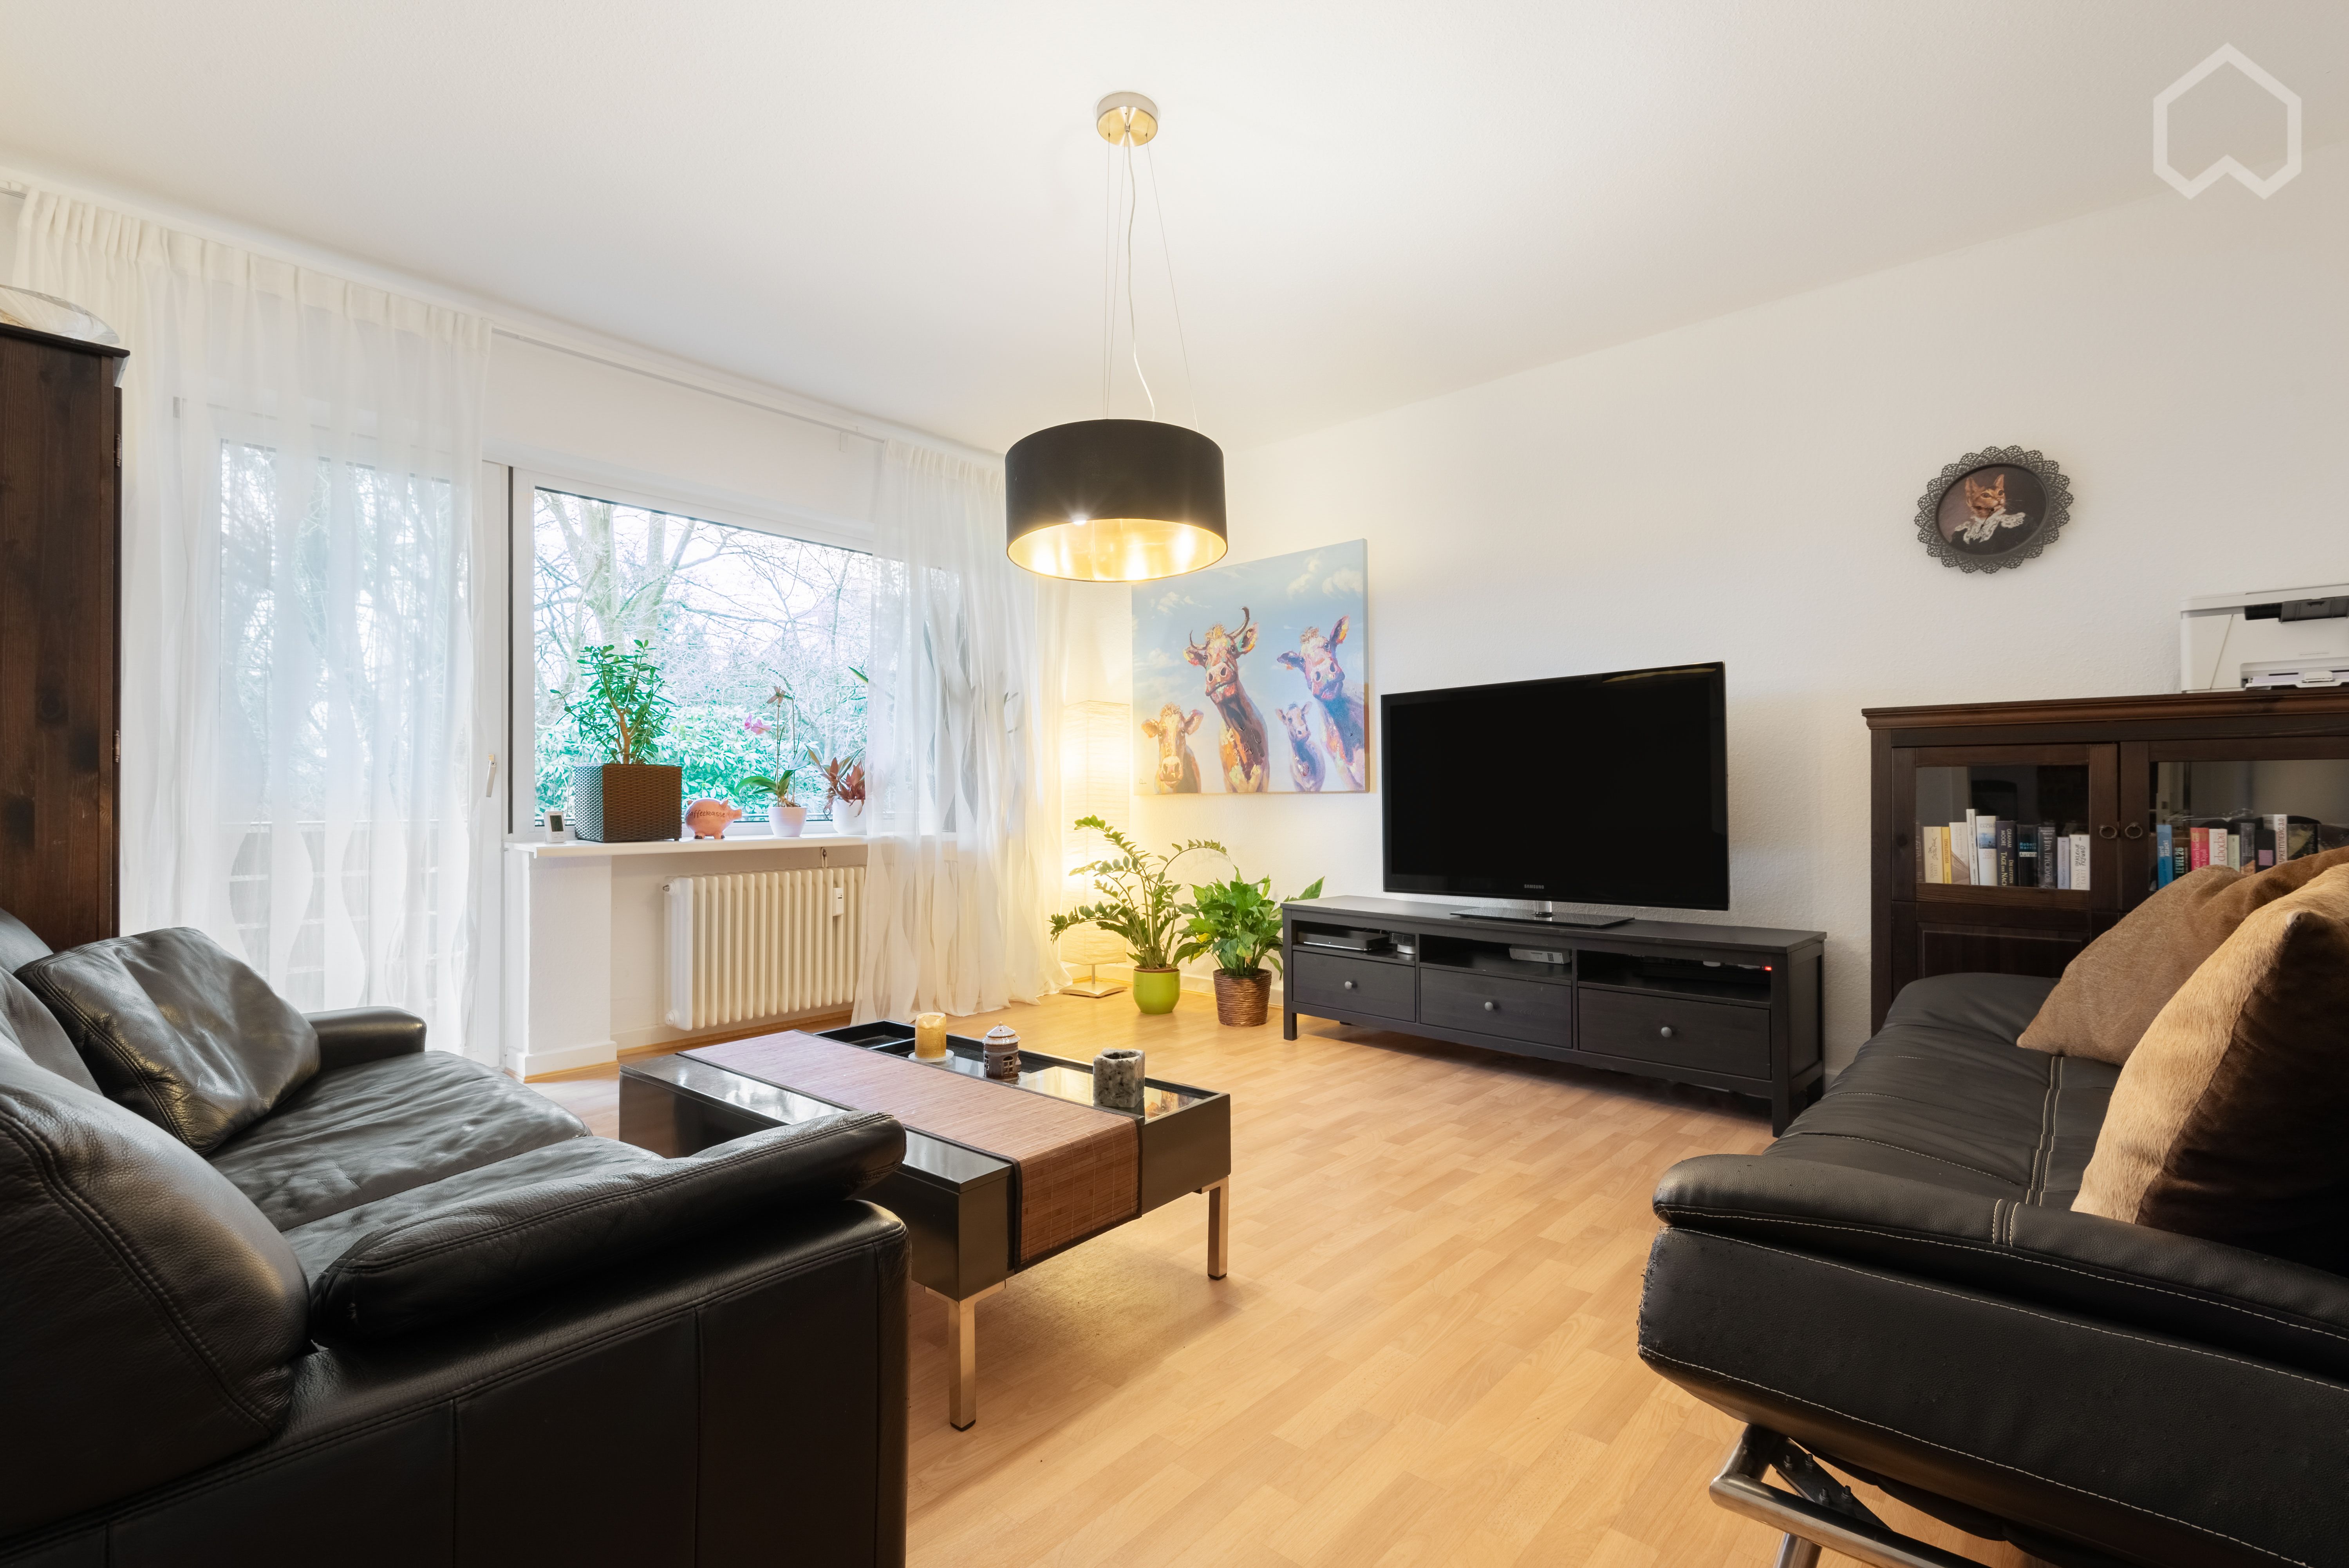 Furnished Apartments Hamburg Rent Flat In Hamburg